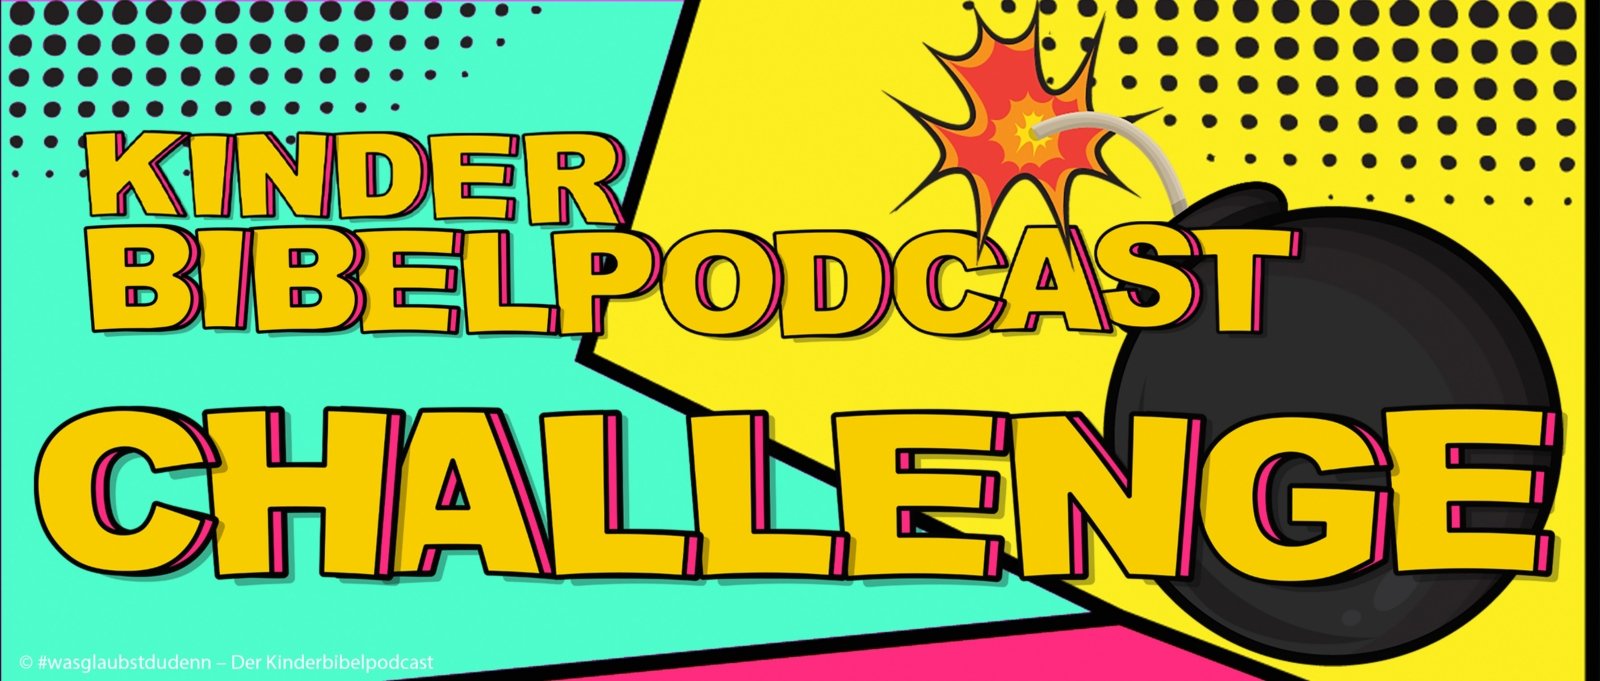 kinderbibelpodcast-challenge